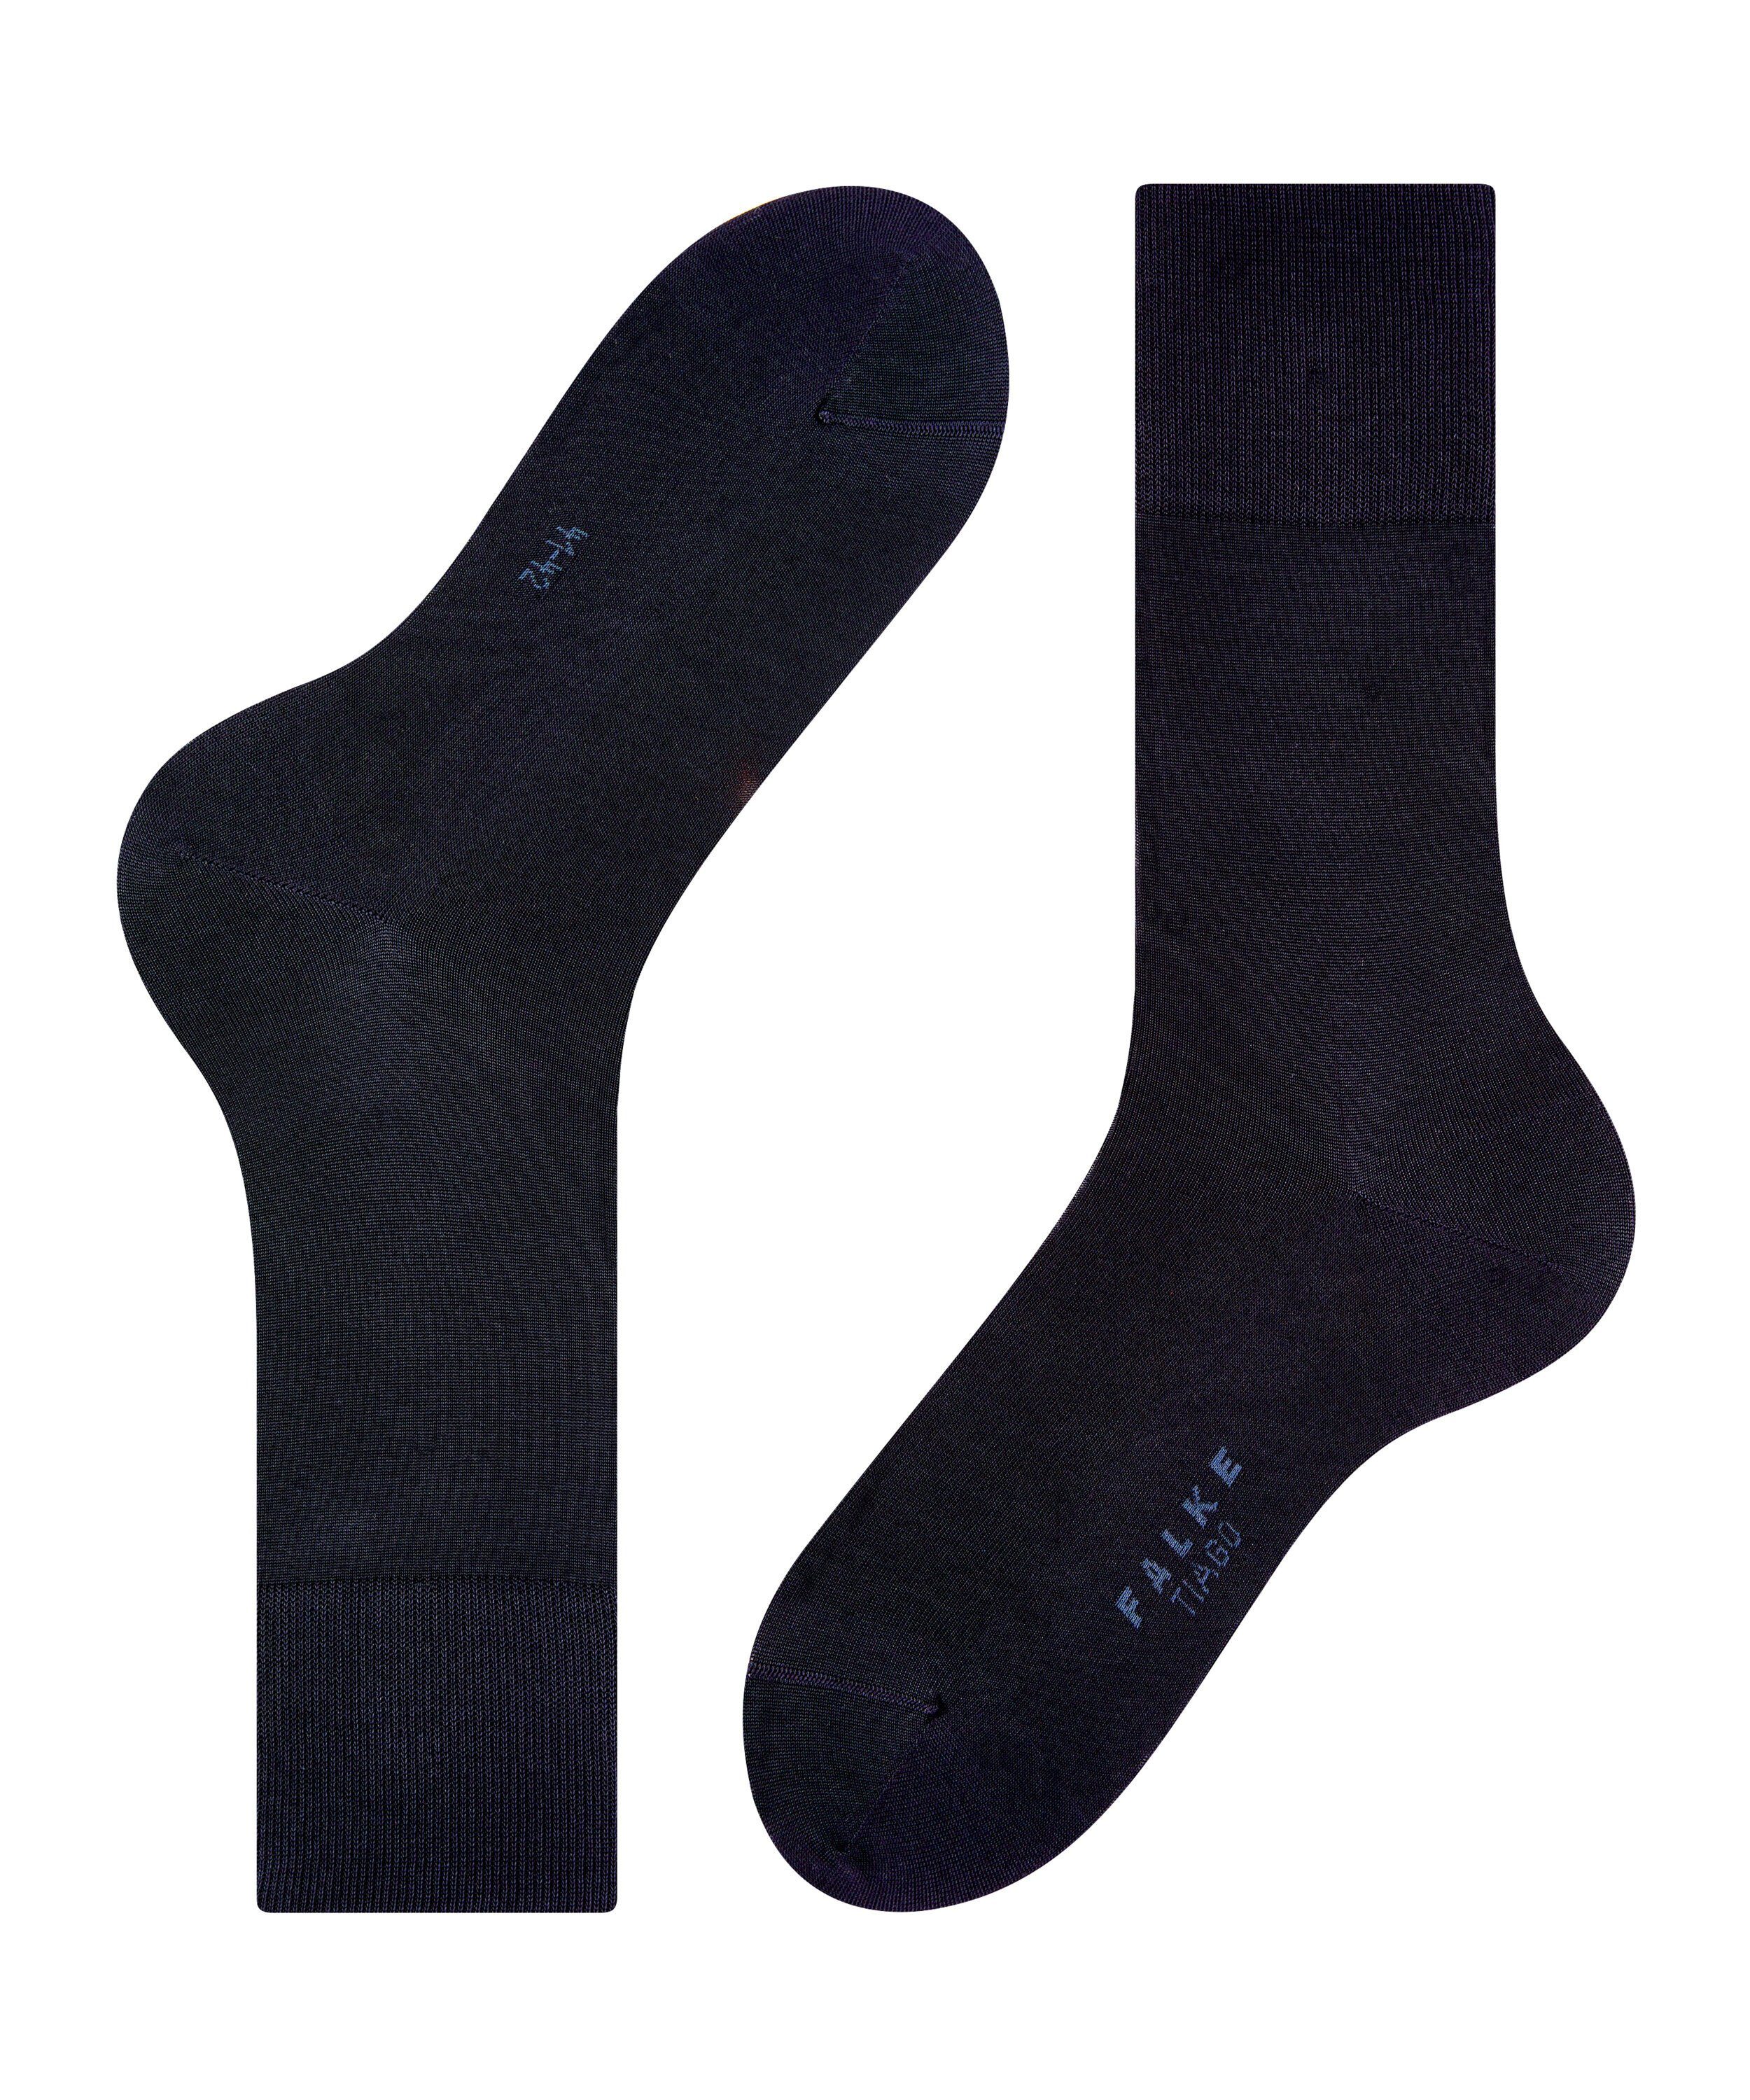 Tiago FALKE (1-Paar) dark navy (6370) Socken